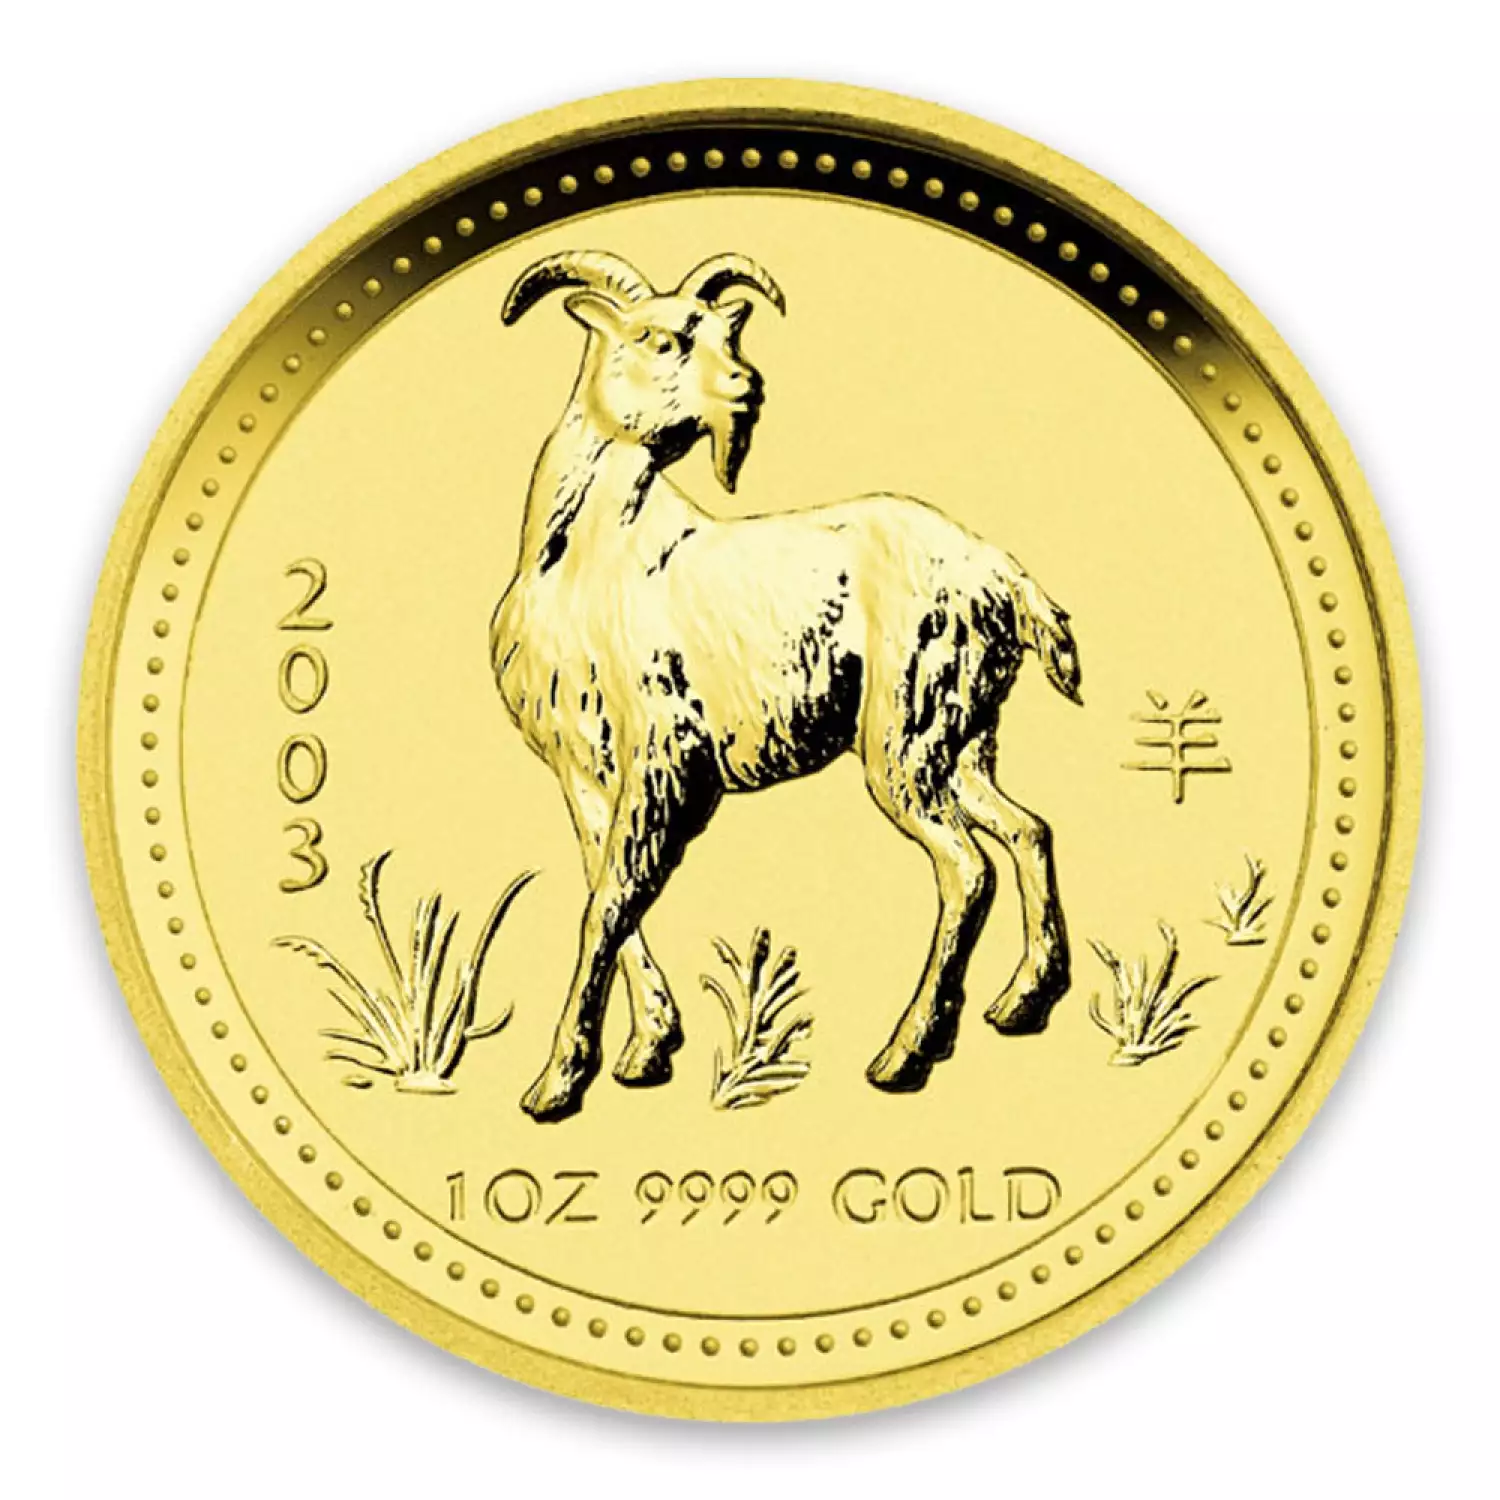 2003 1oz Australian Perth Mint Gold Lunar: Year of the Goat (2)